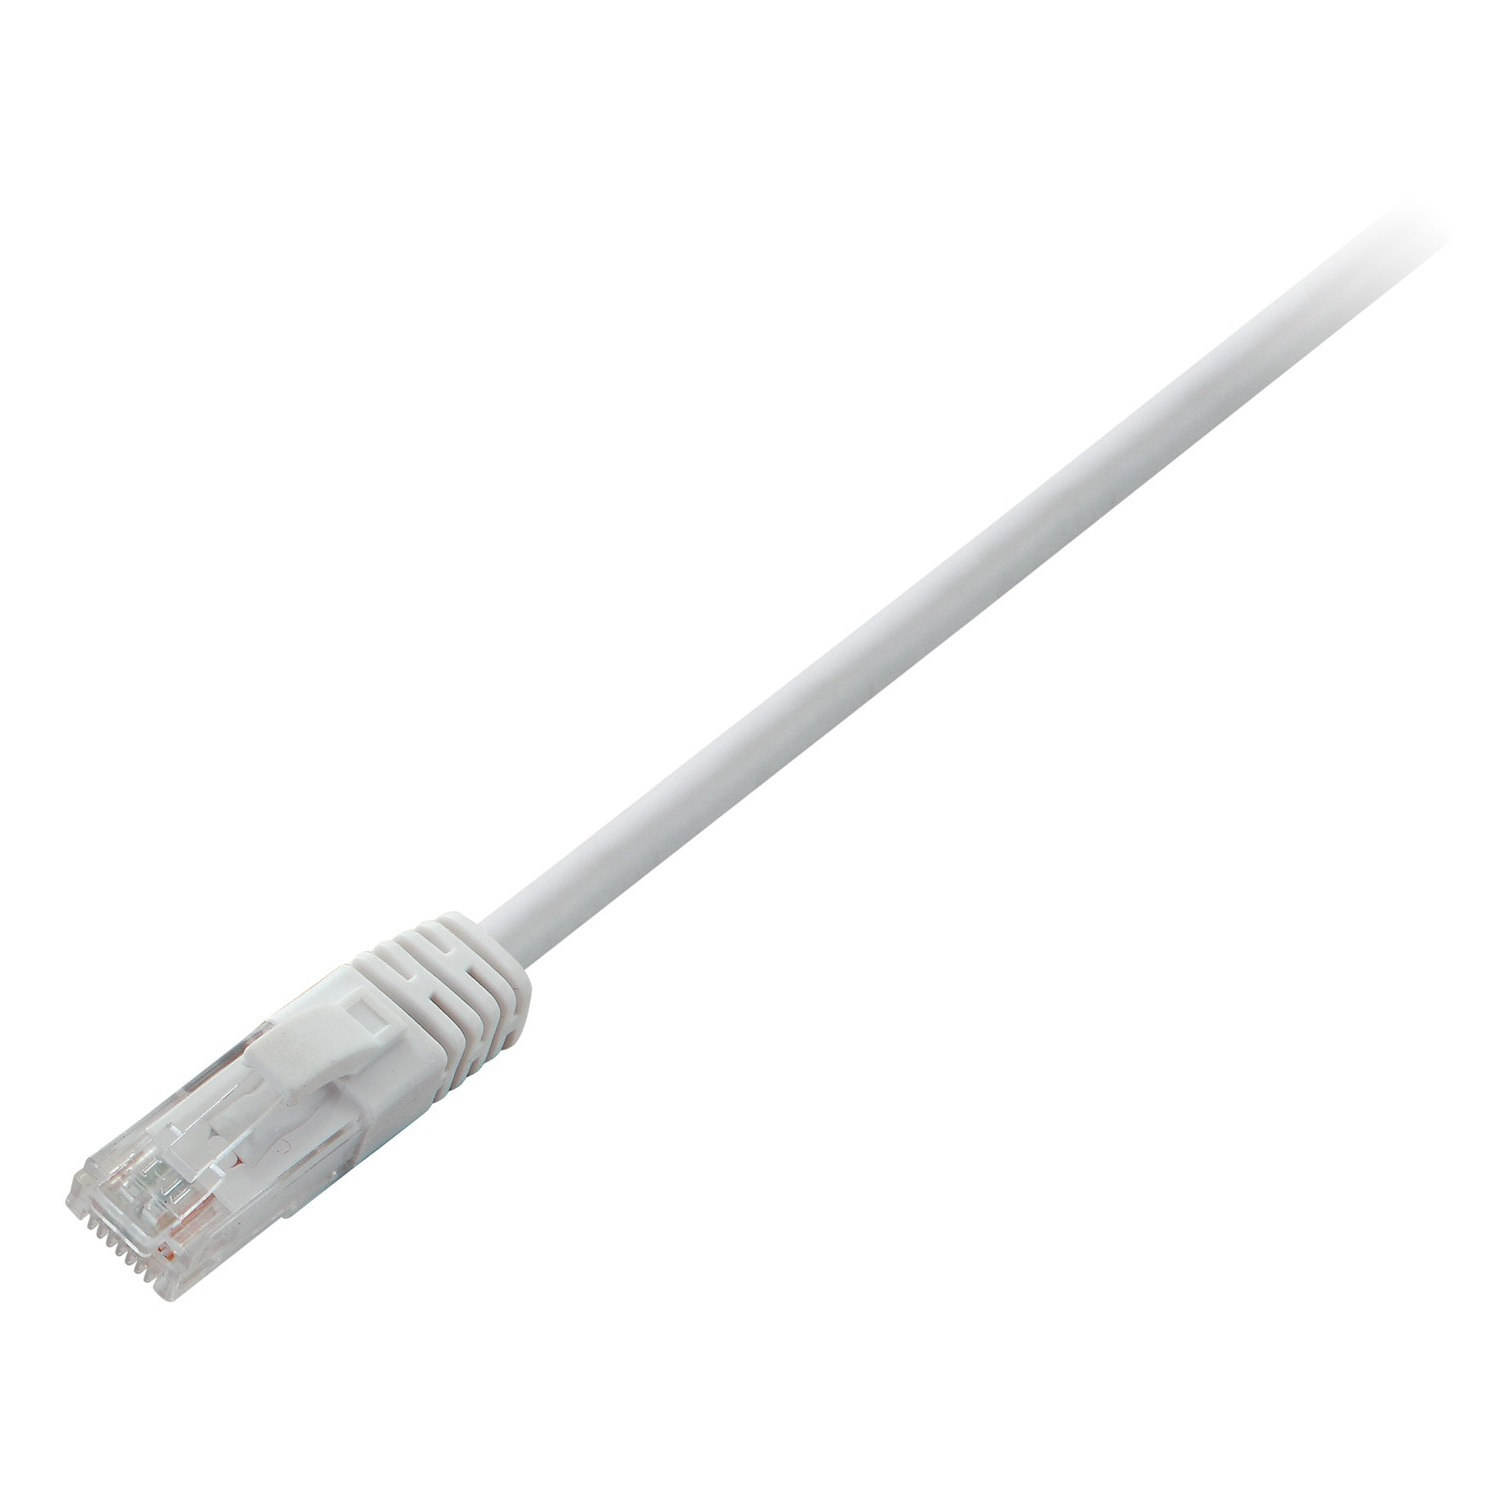 Photos - Cable (video, audio, USB) V7 CAT6 Ethernet UTP 02M White V7CAT6UTP-02M-WHT-1E 